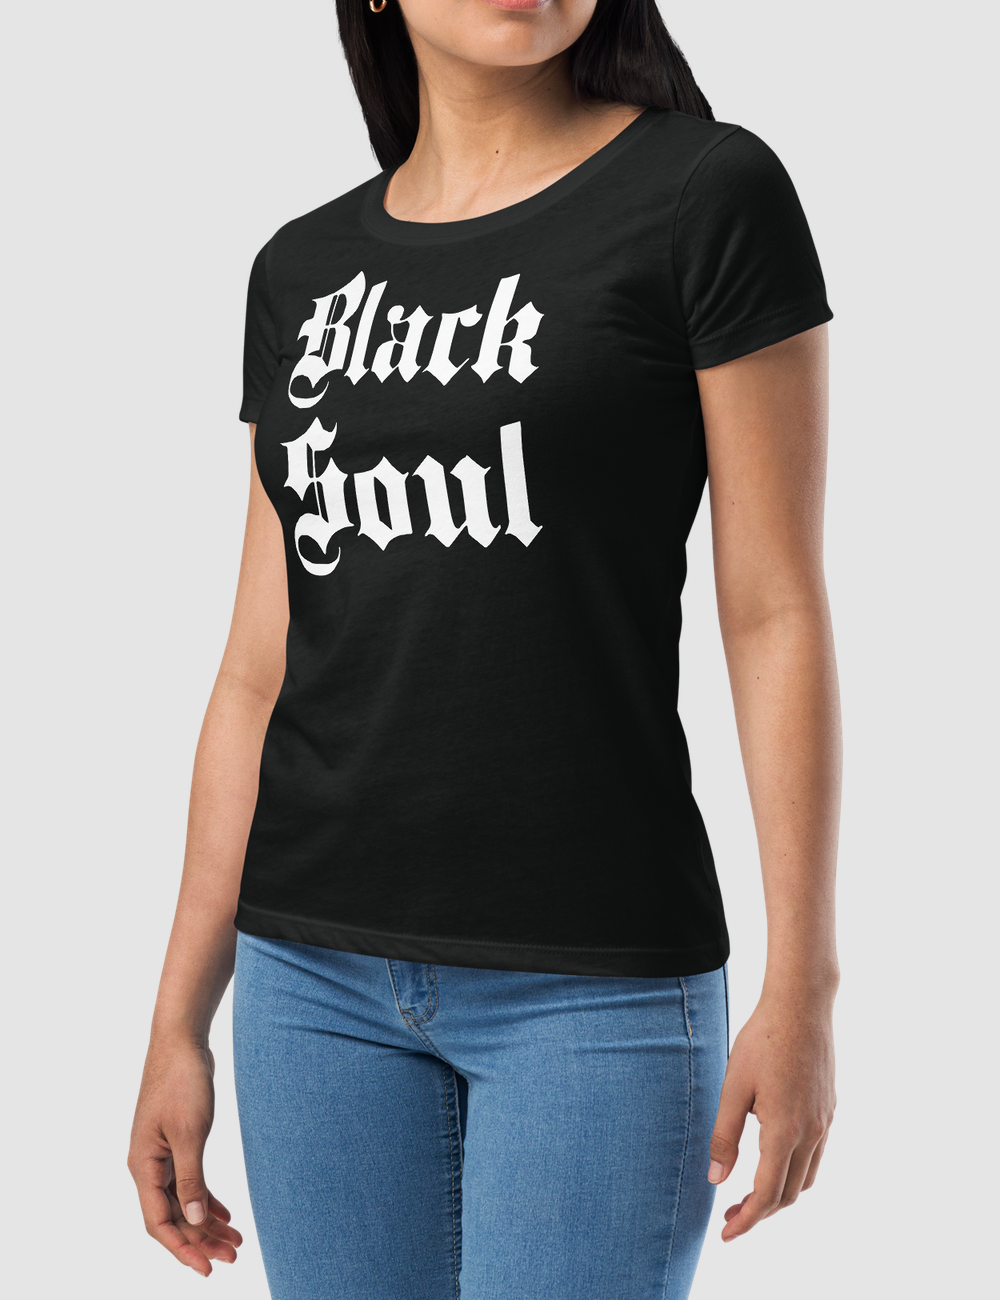 Black Soul | Women's Fitted T-Shirt OniTakai